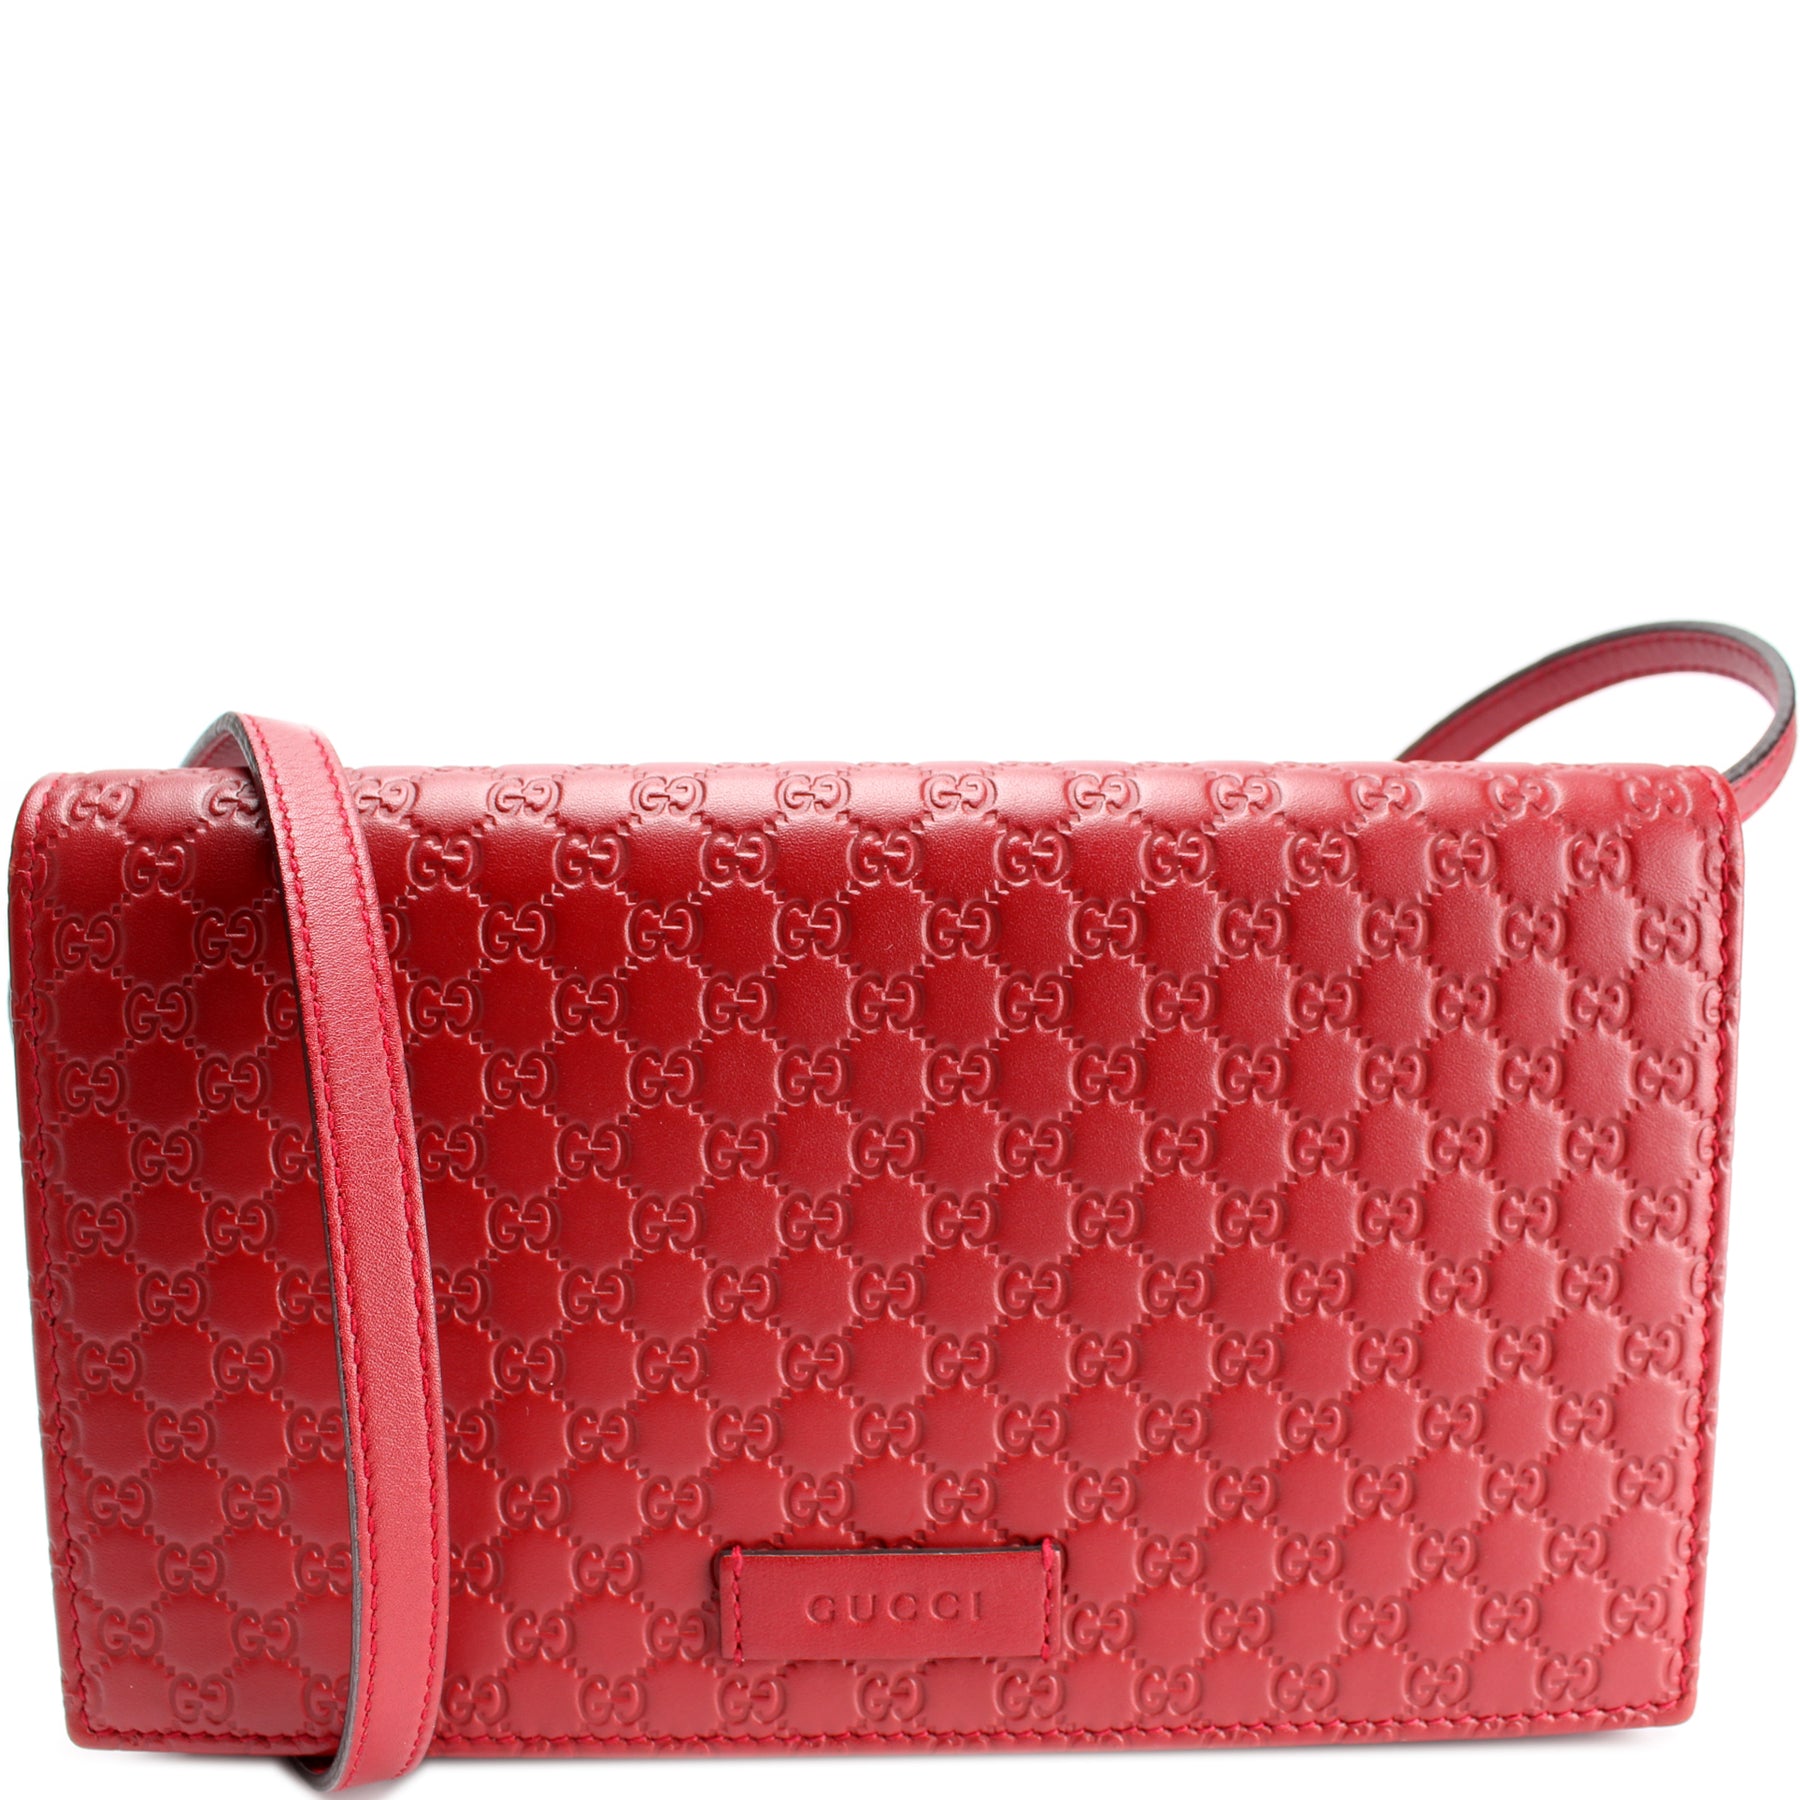 Gucci Microguccissima Small Leather Crossbody Bag Red